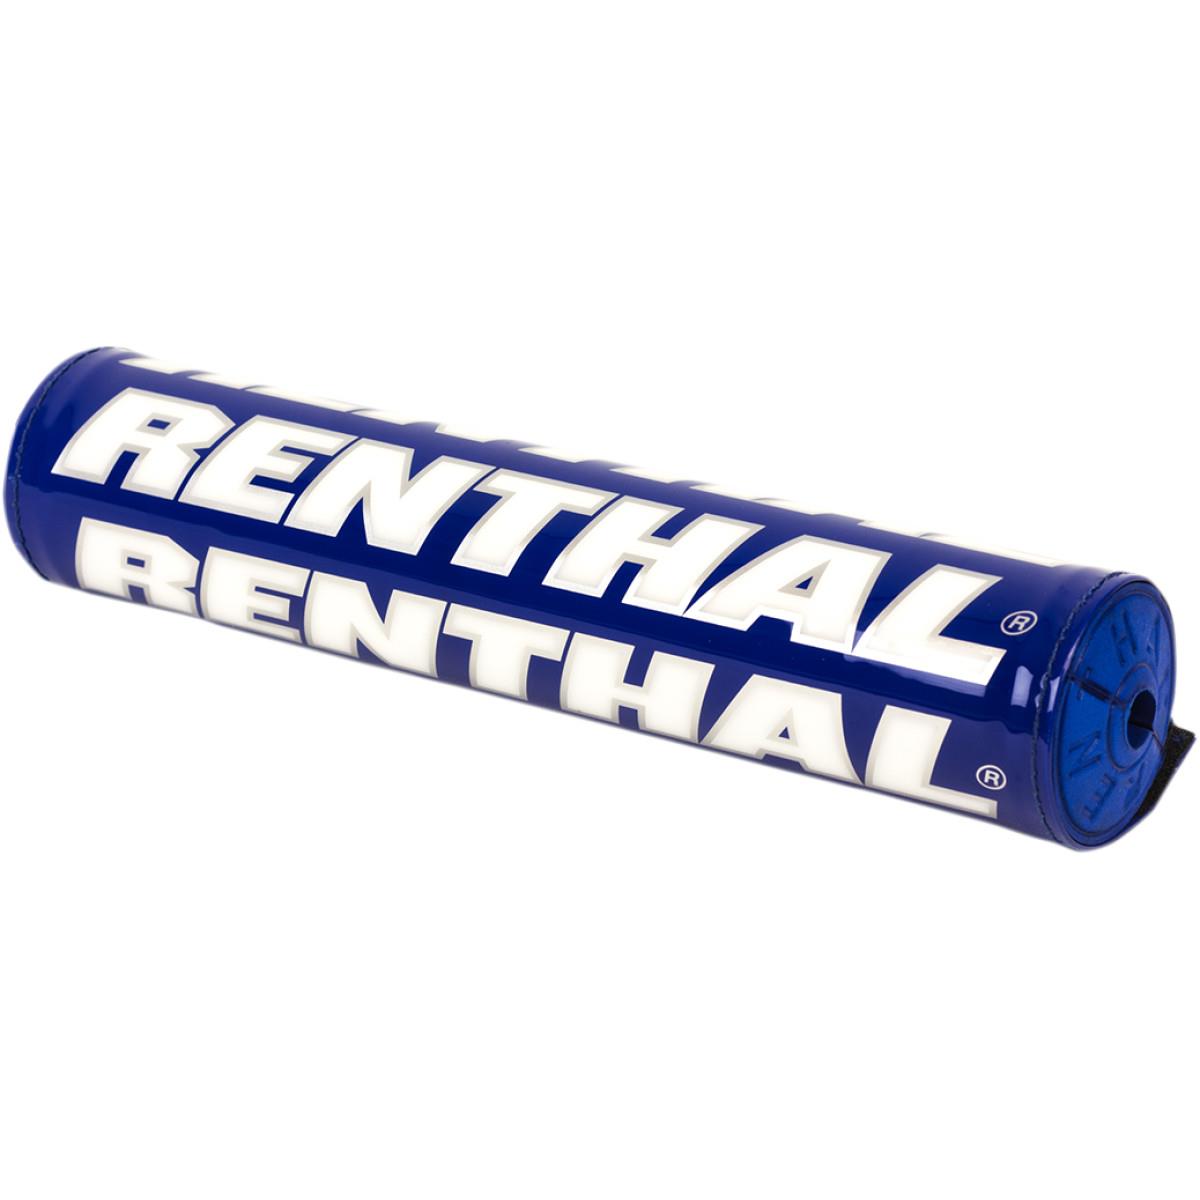 Renthal Bar Pad SX Blue - Limited Editon